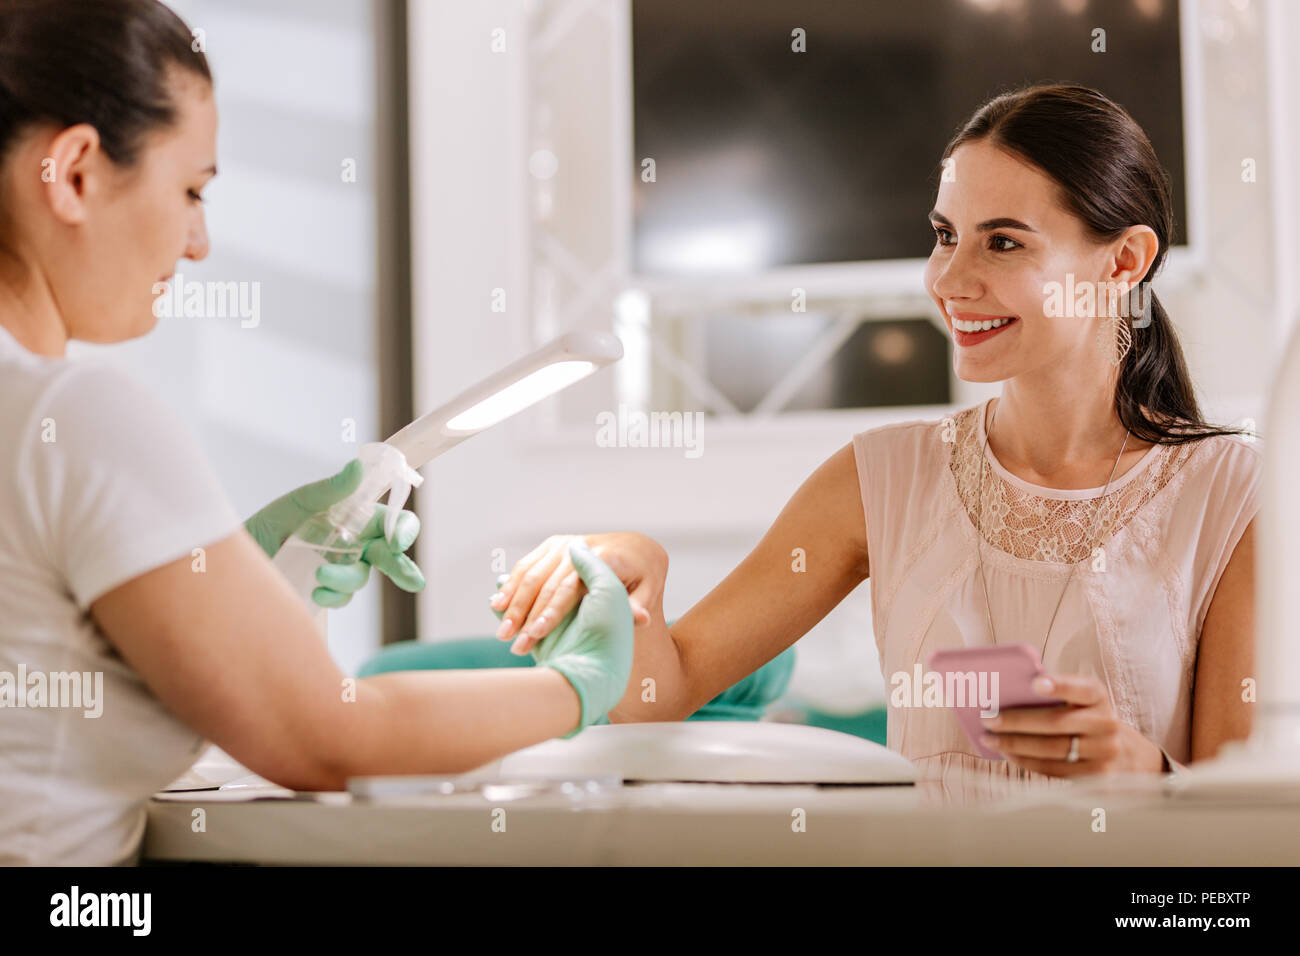 Appealing woman enjoying beauty treatment getting manicure Stock Photo